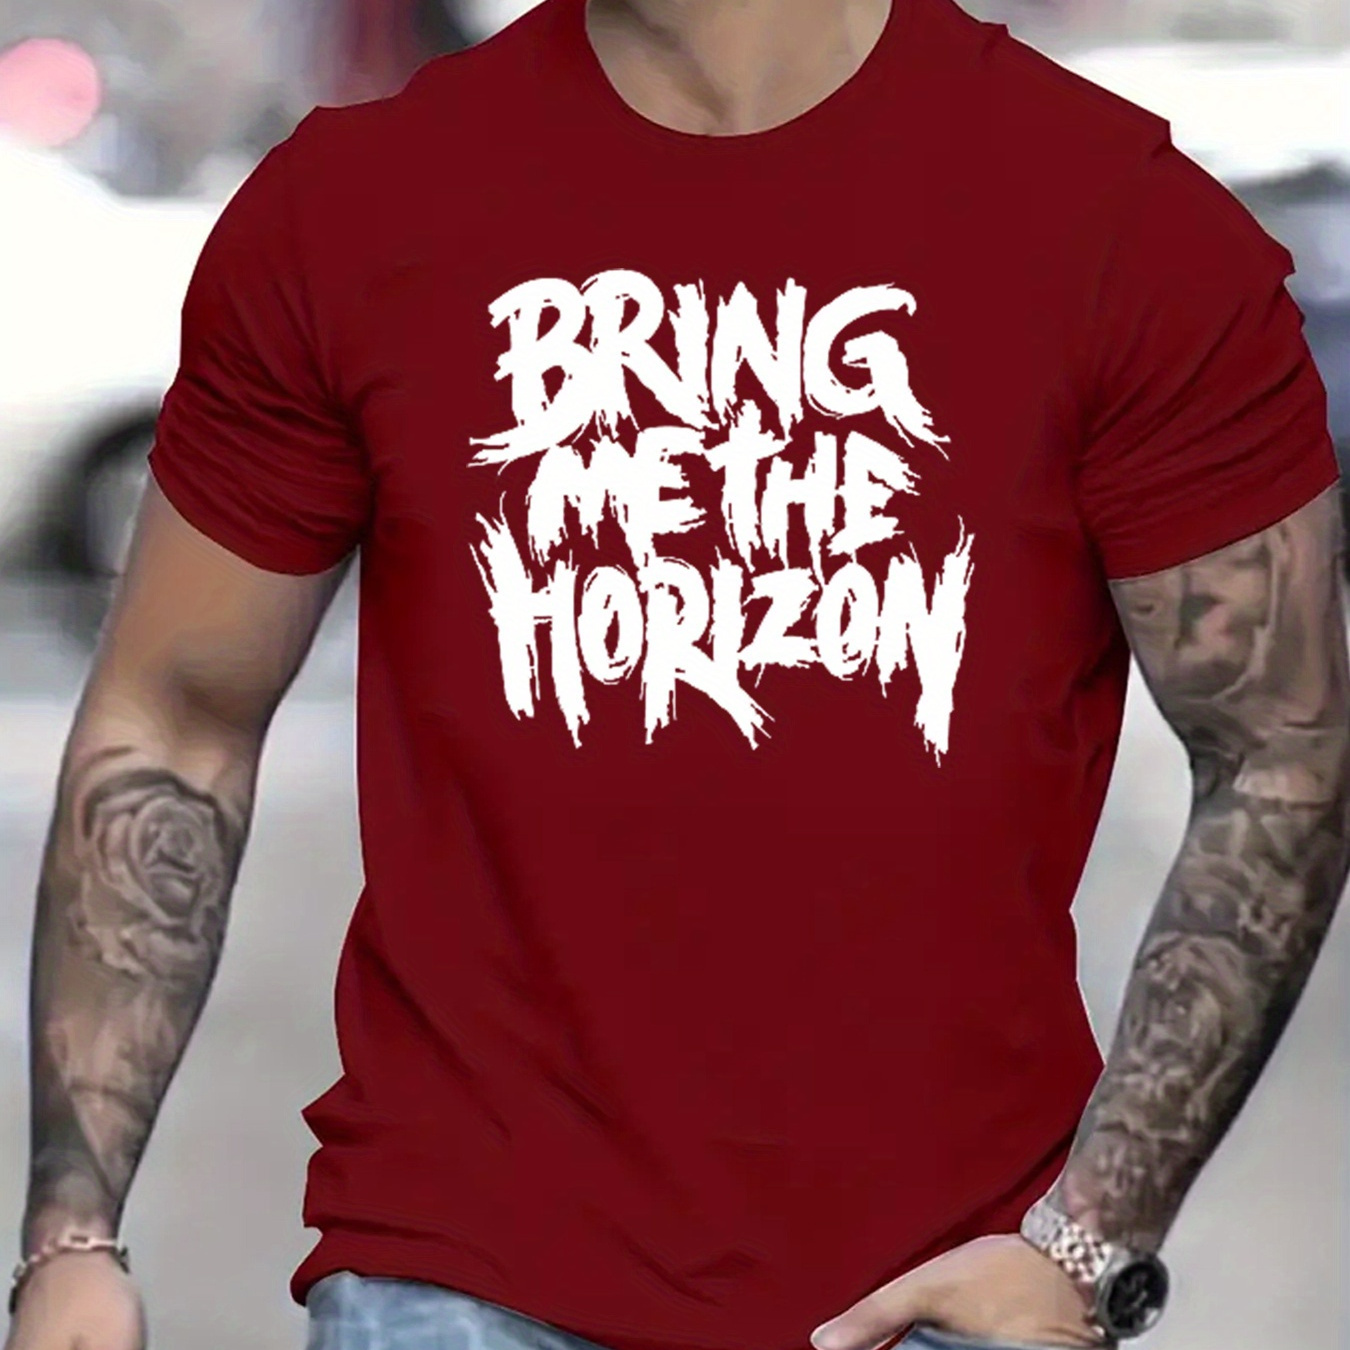 

Horizon Print Tee Shirt, Tees For Men, Casual Short Sleeve T-shirt For Summer